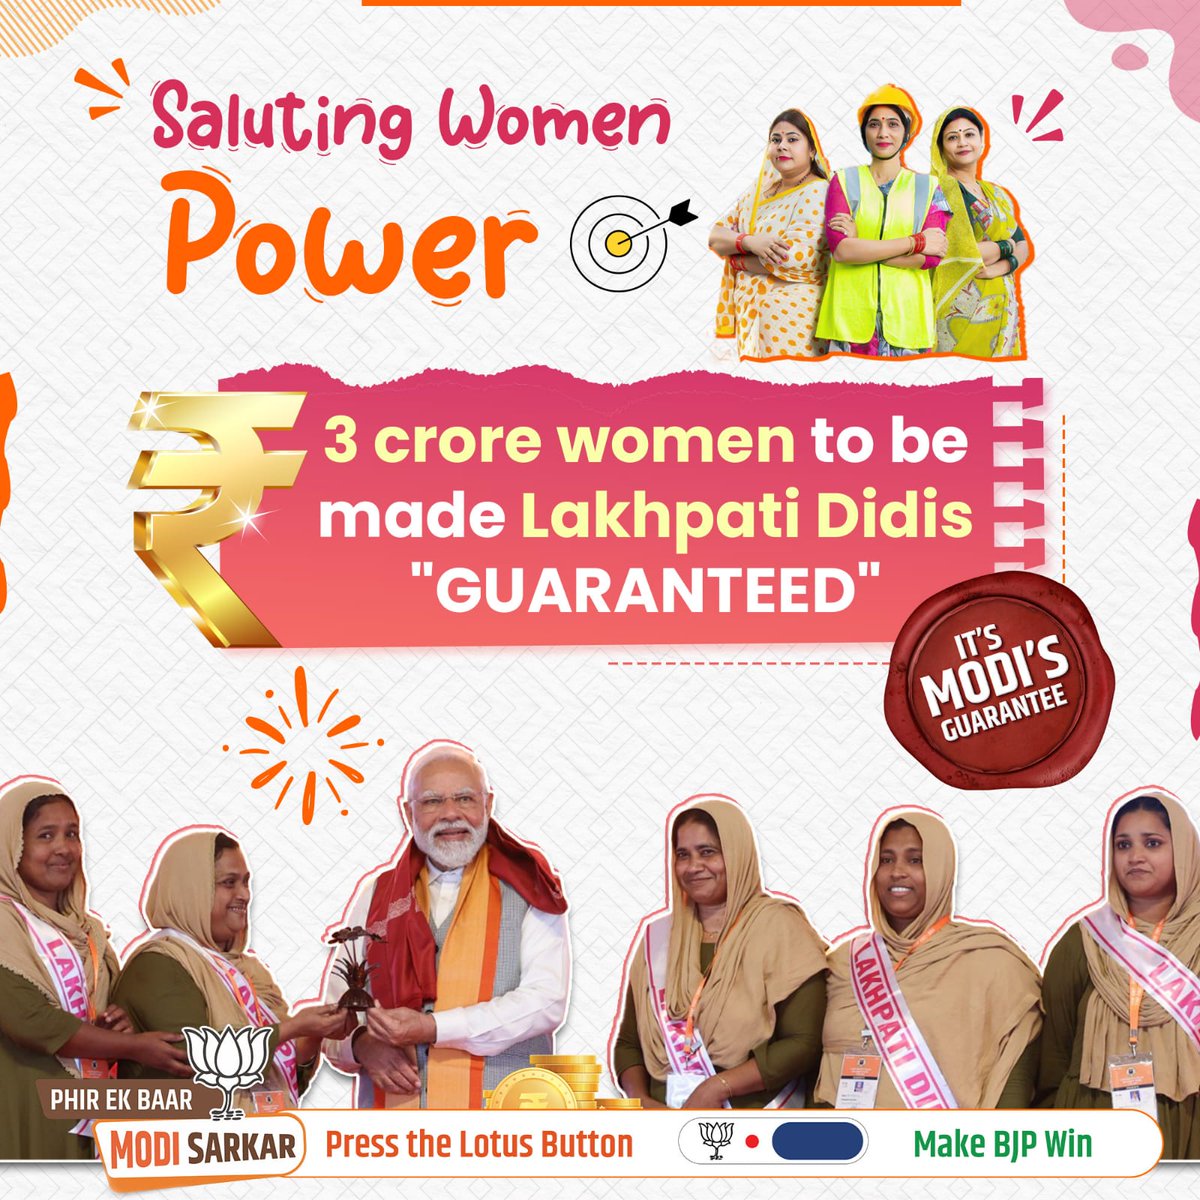 3 crore women to be made Lakhpati Didi's, This is #ModiKiGuarantee. #PhirEkBaarModiSarkar